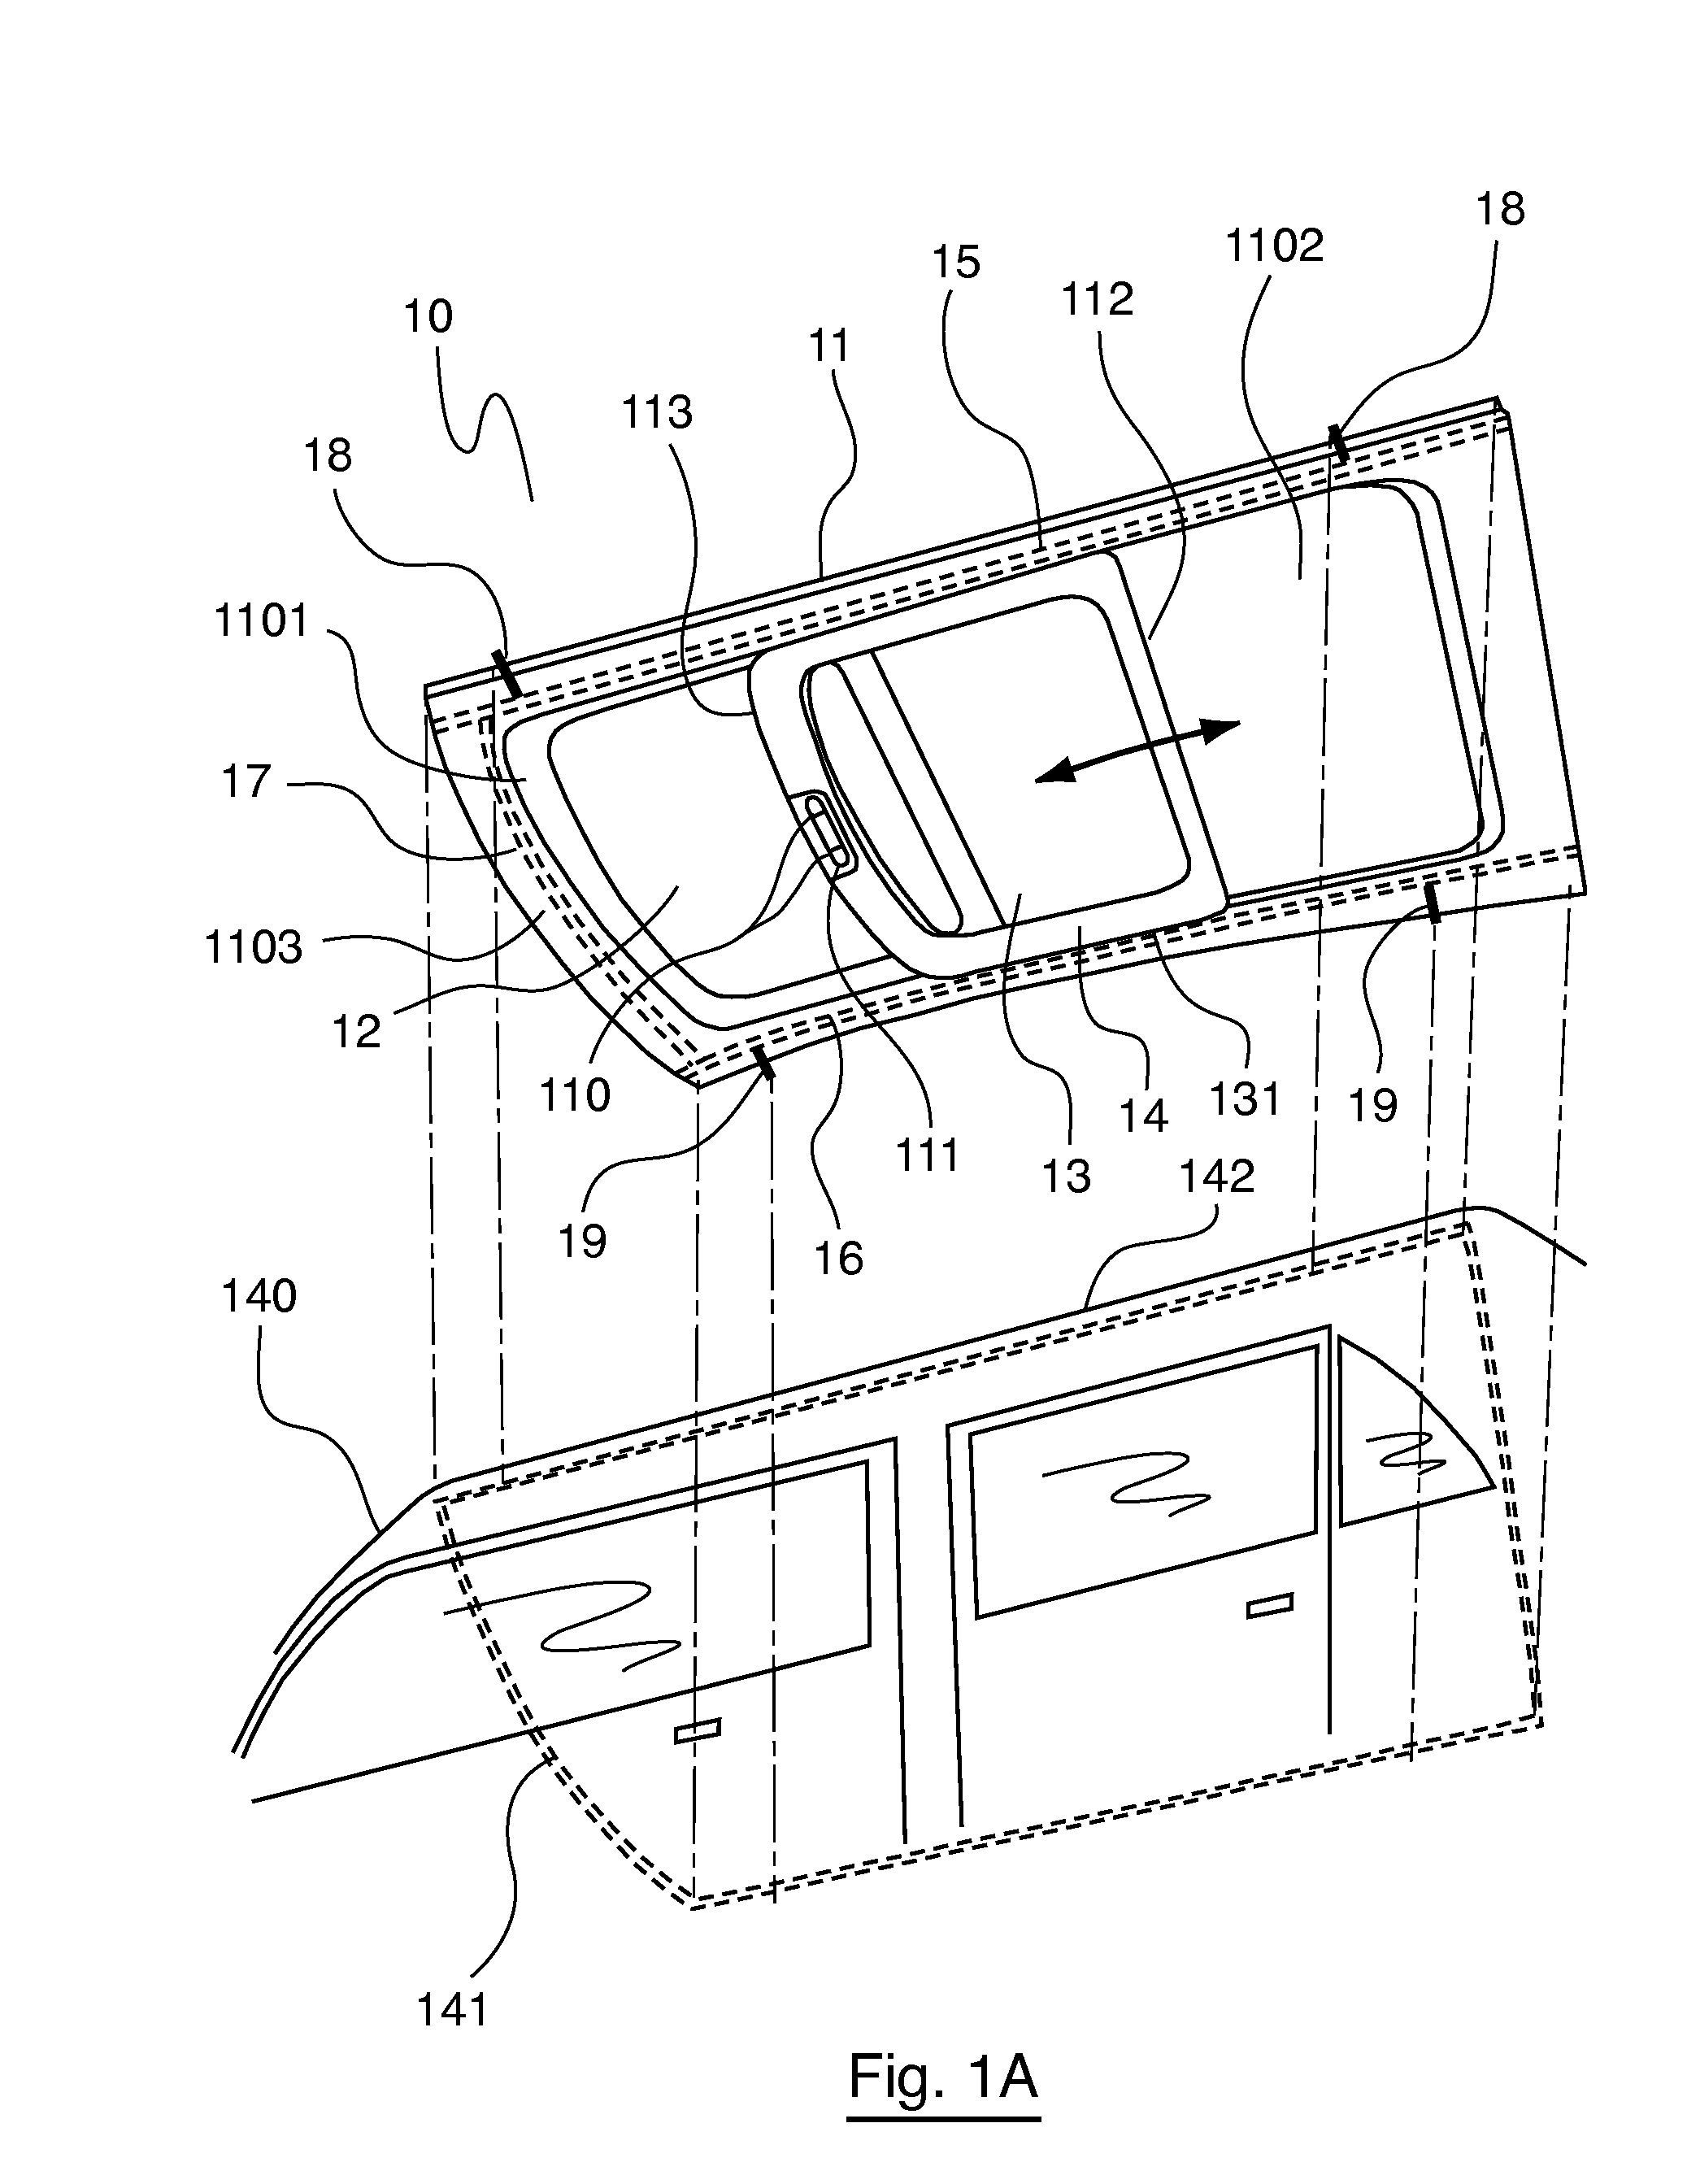 Glazed Roof of a Motor Vehicle, Corresponding Method of Assembly and Corresponding Vehicle